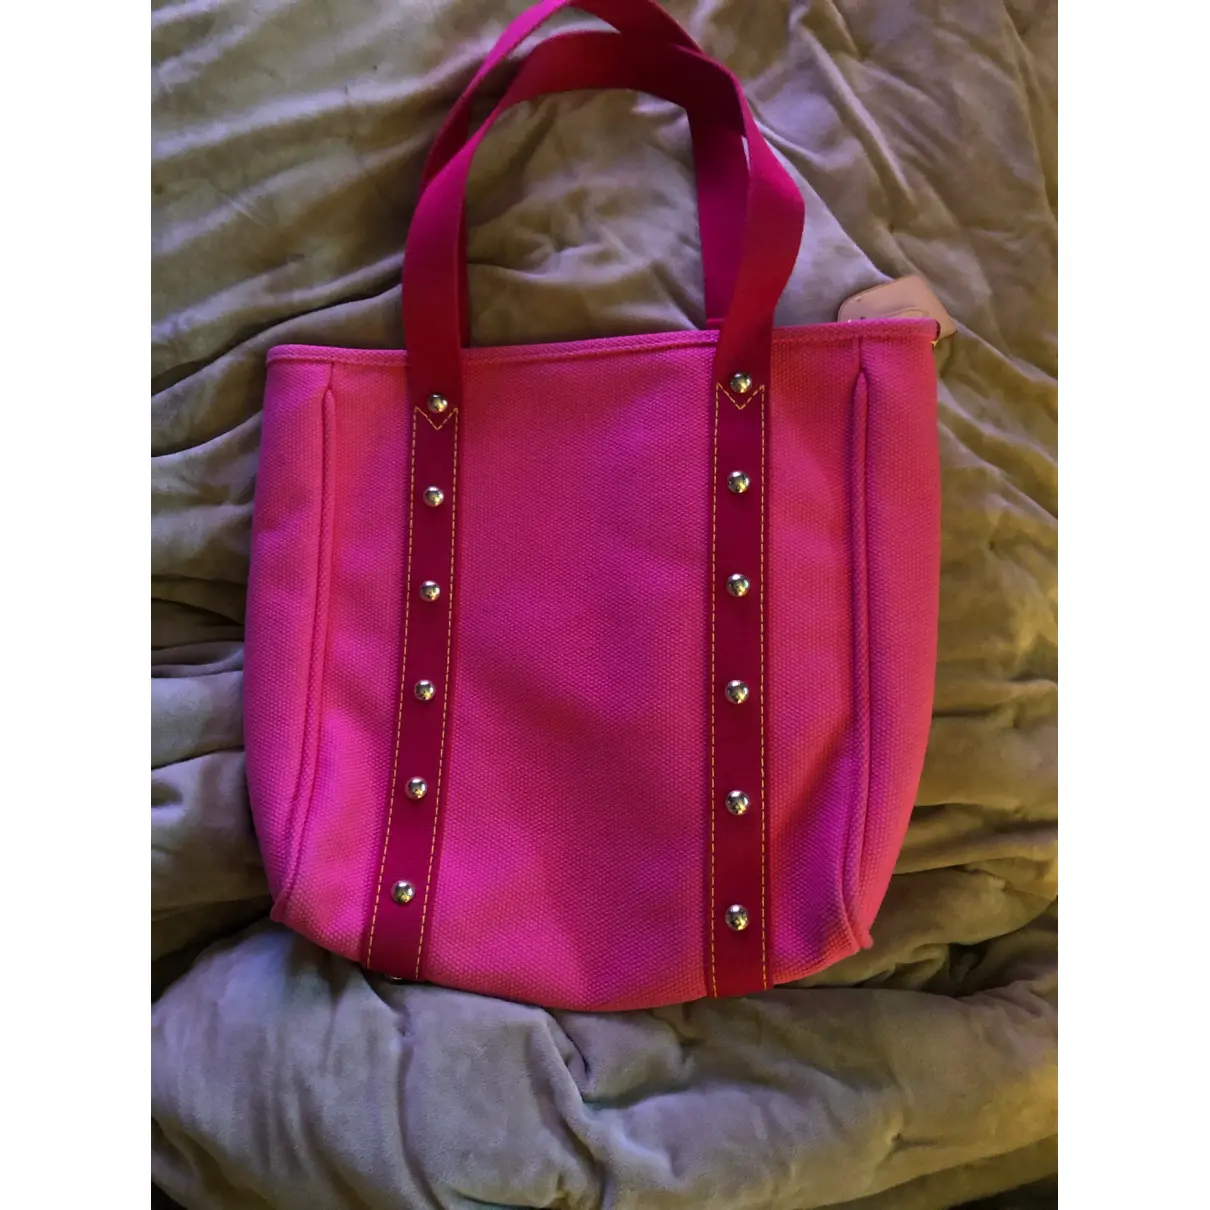 Buy Louis Vuitton Antigua cloth handbag online